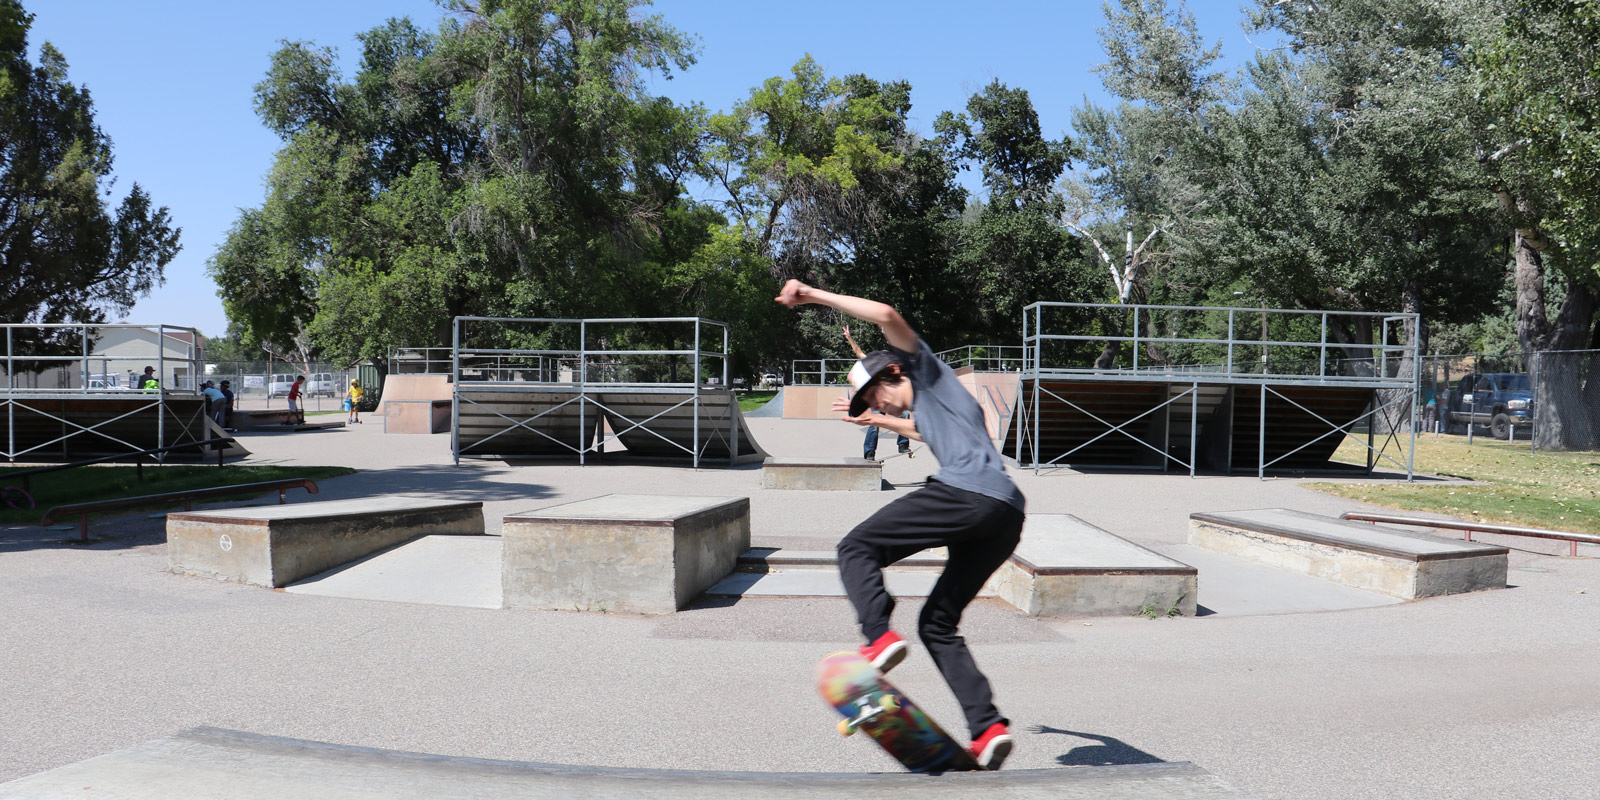 image: skateboarder Pocatello skate park